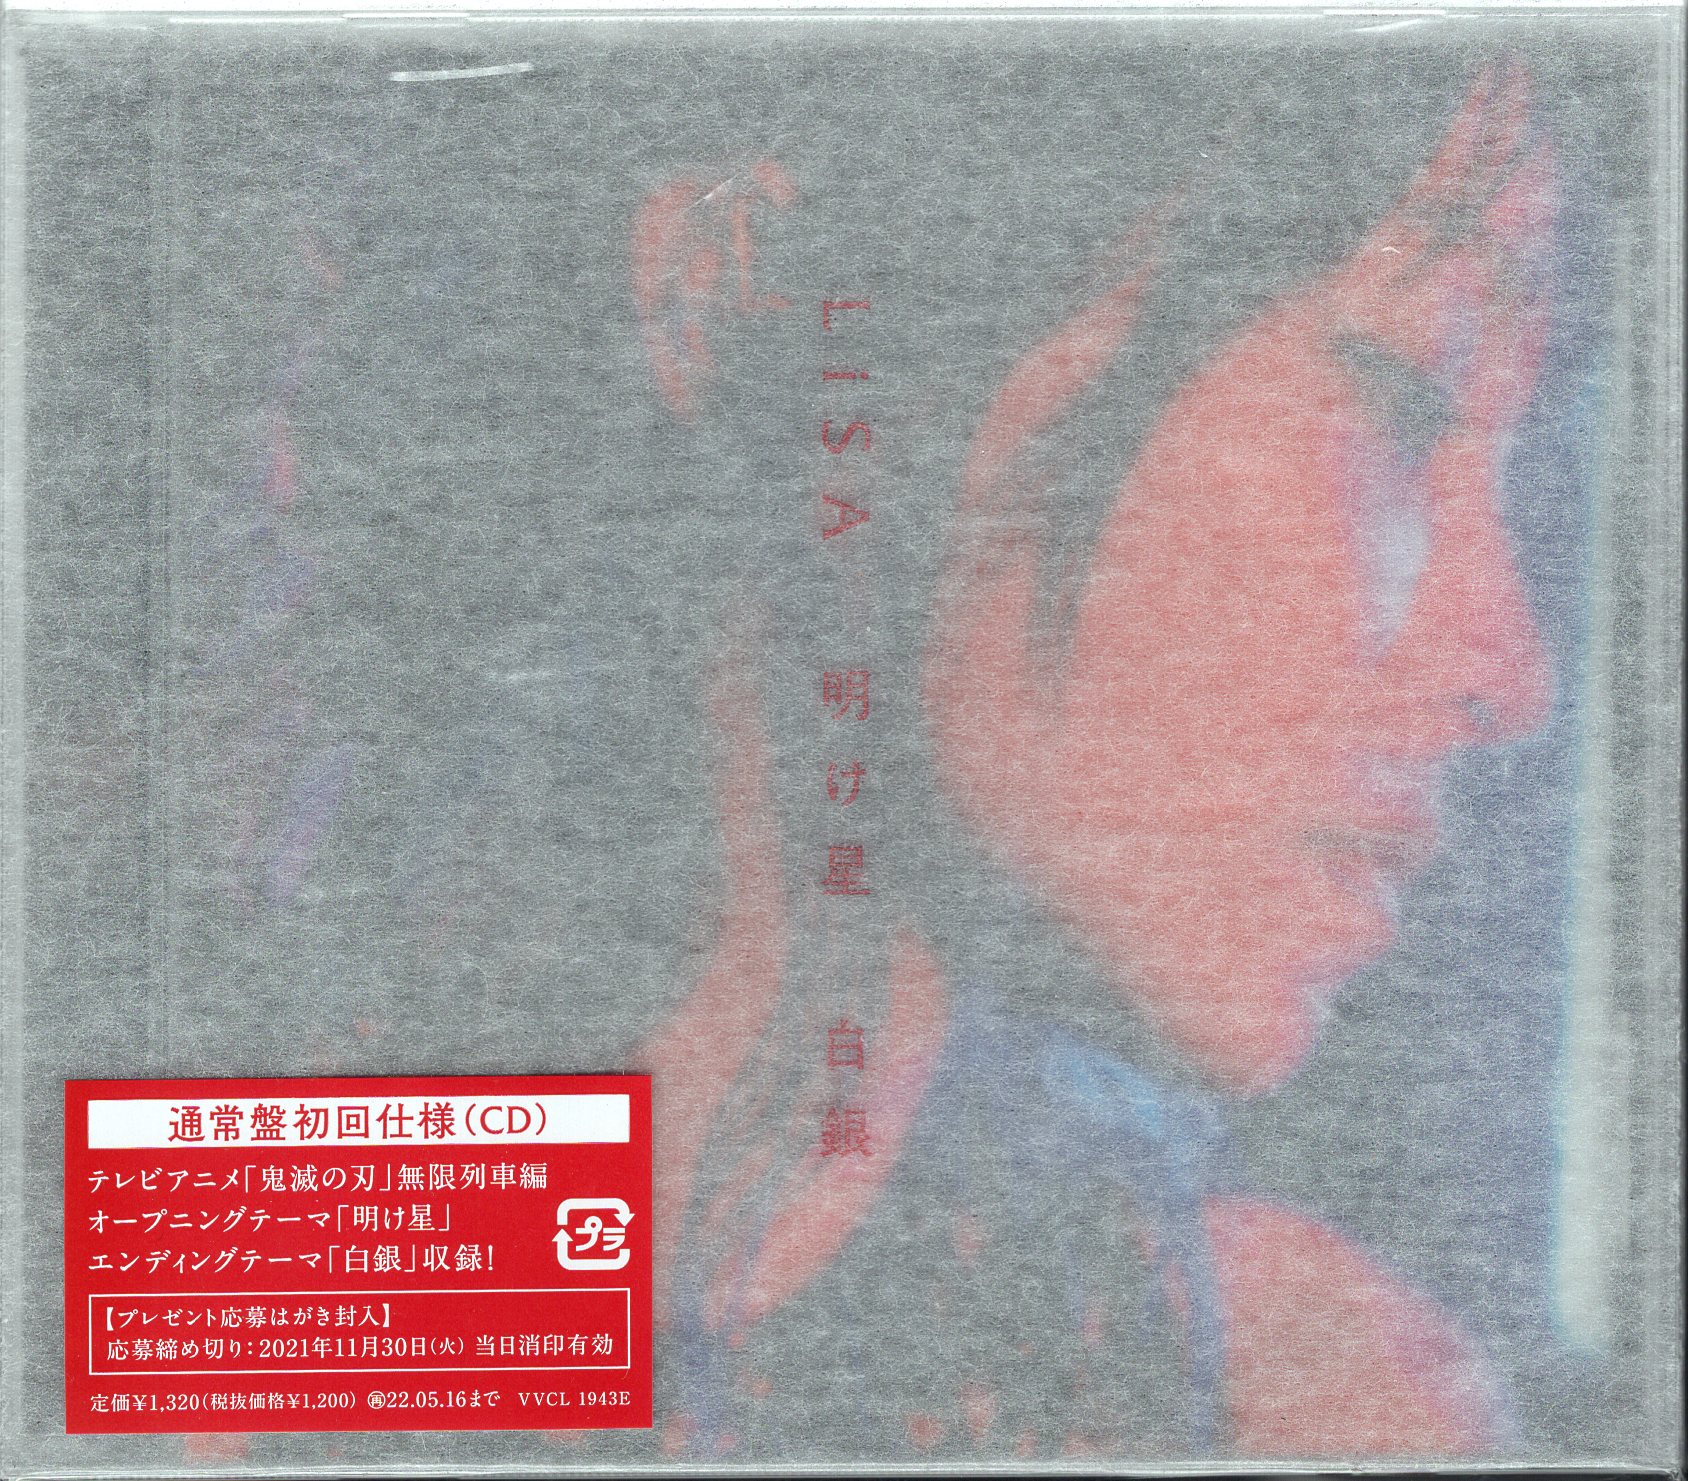 LiSA Demon Slayer 12 Vinyl Record EP AKEBOSHI / SHIROGANE Kimetsu